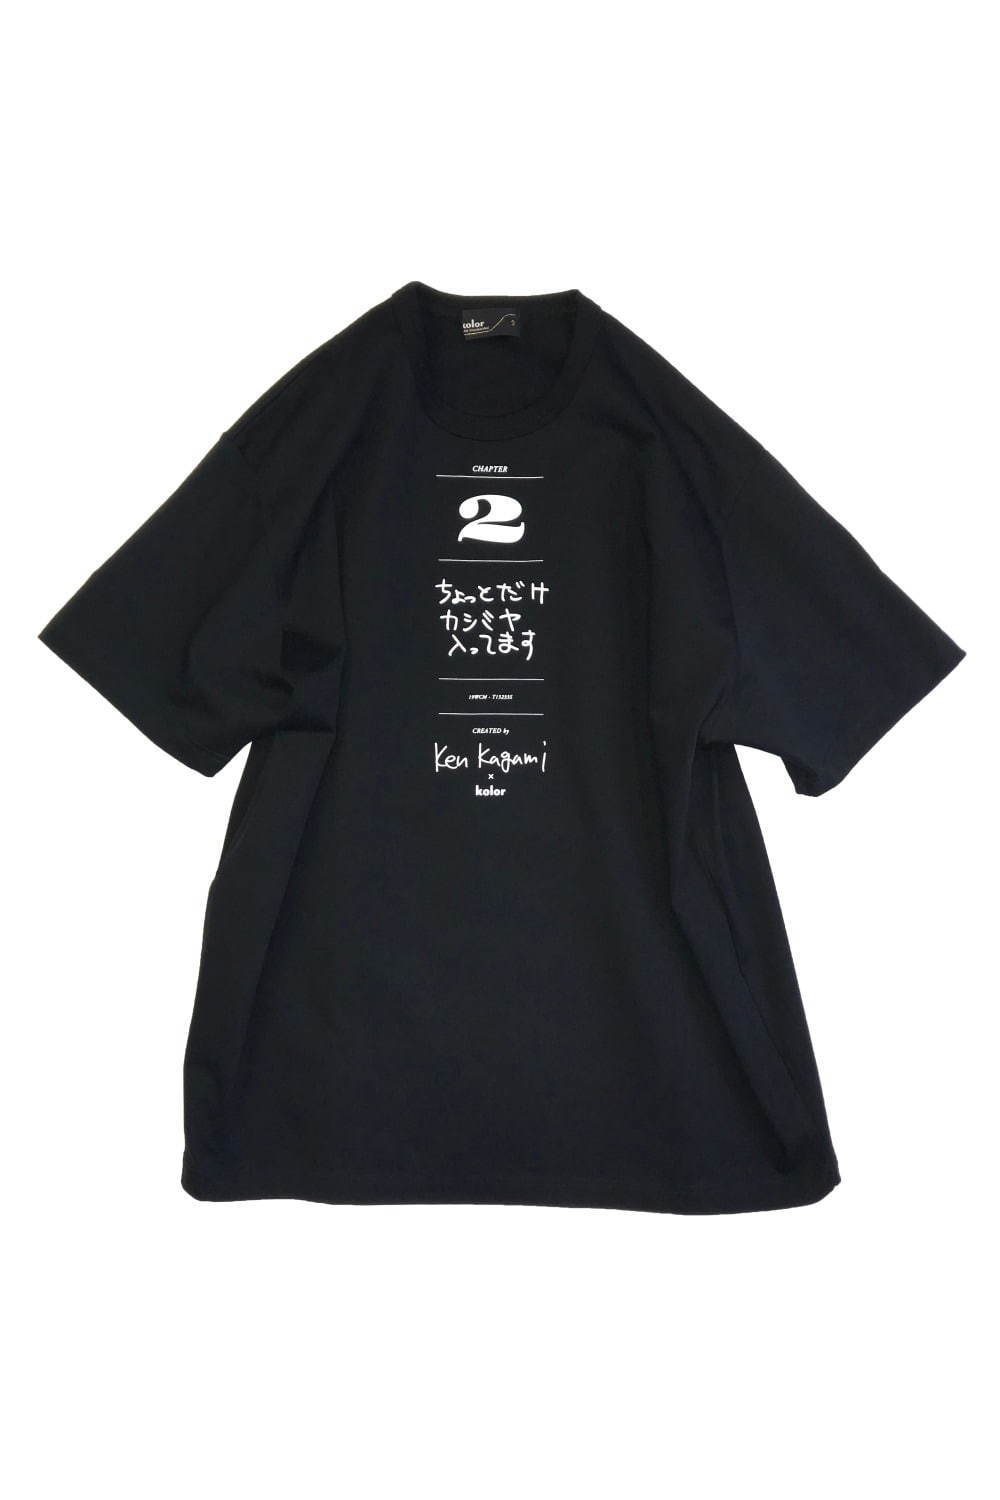 kolor kagami ken Tシャツ 白 タイプ1 サイズ3